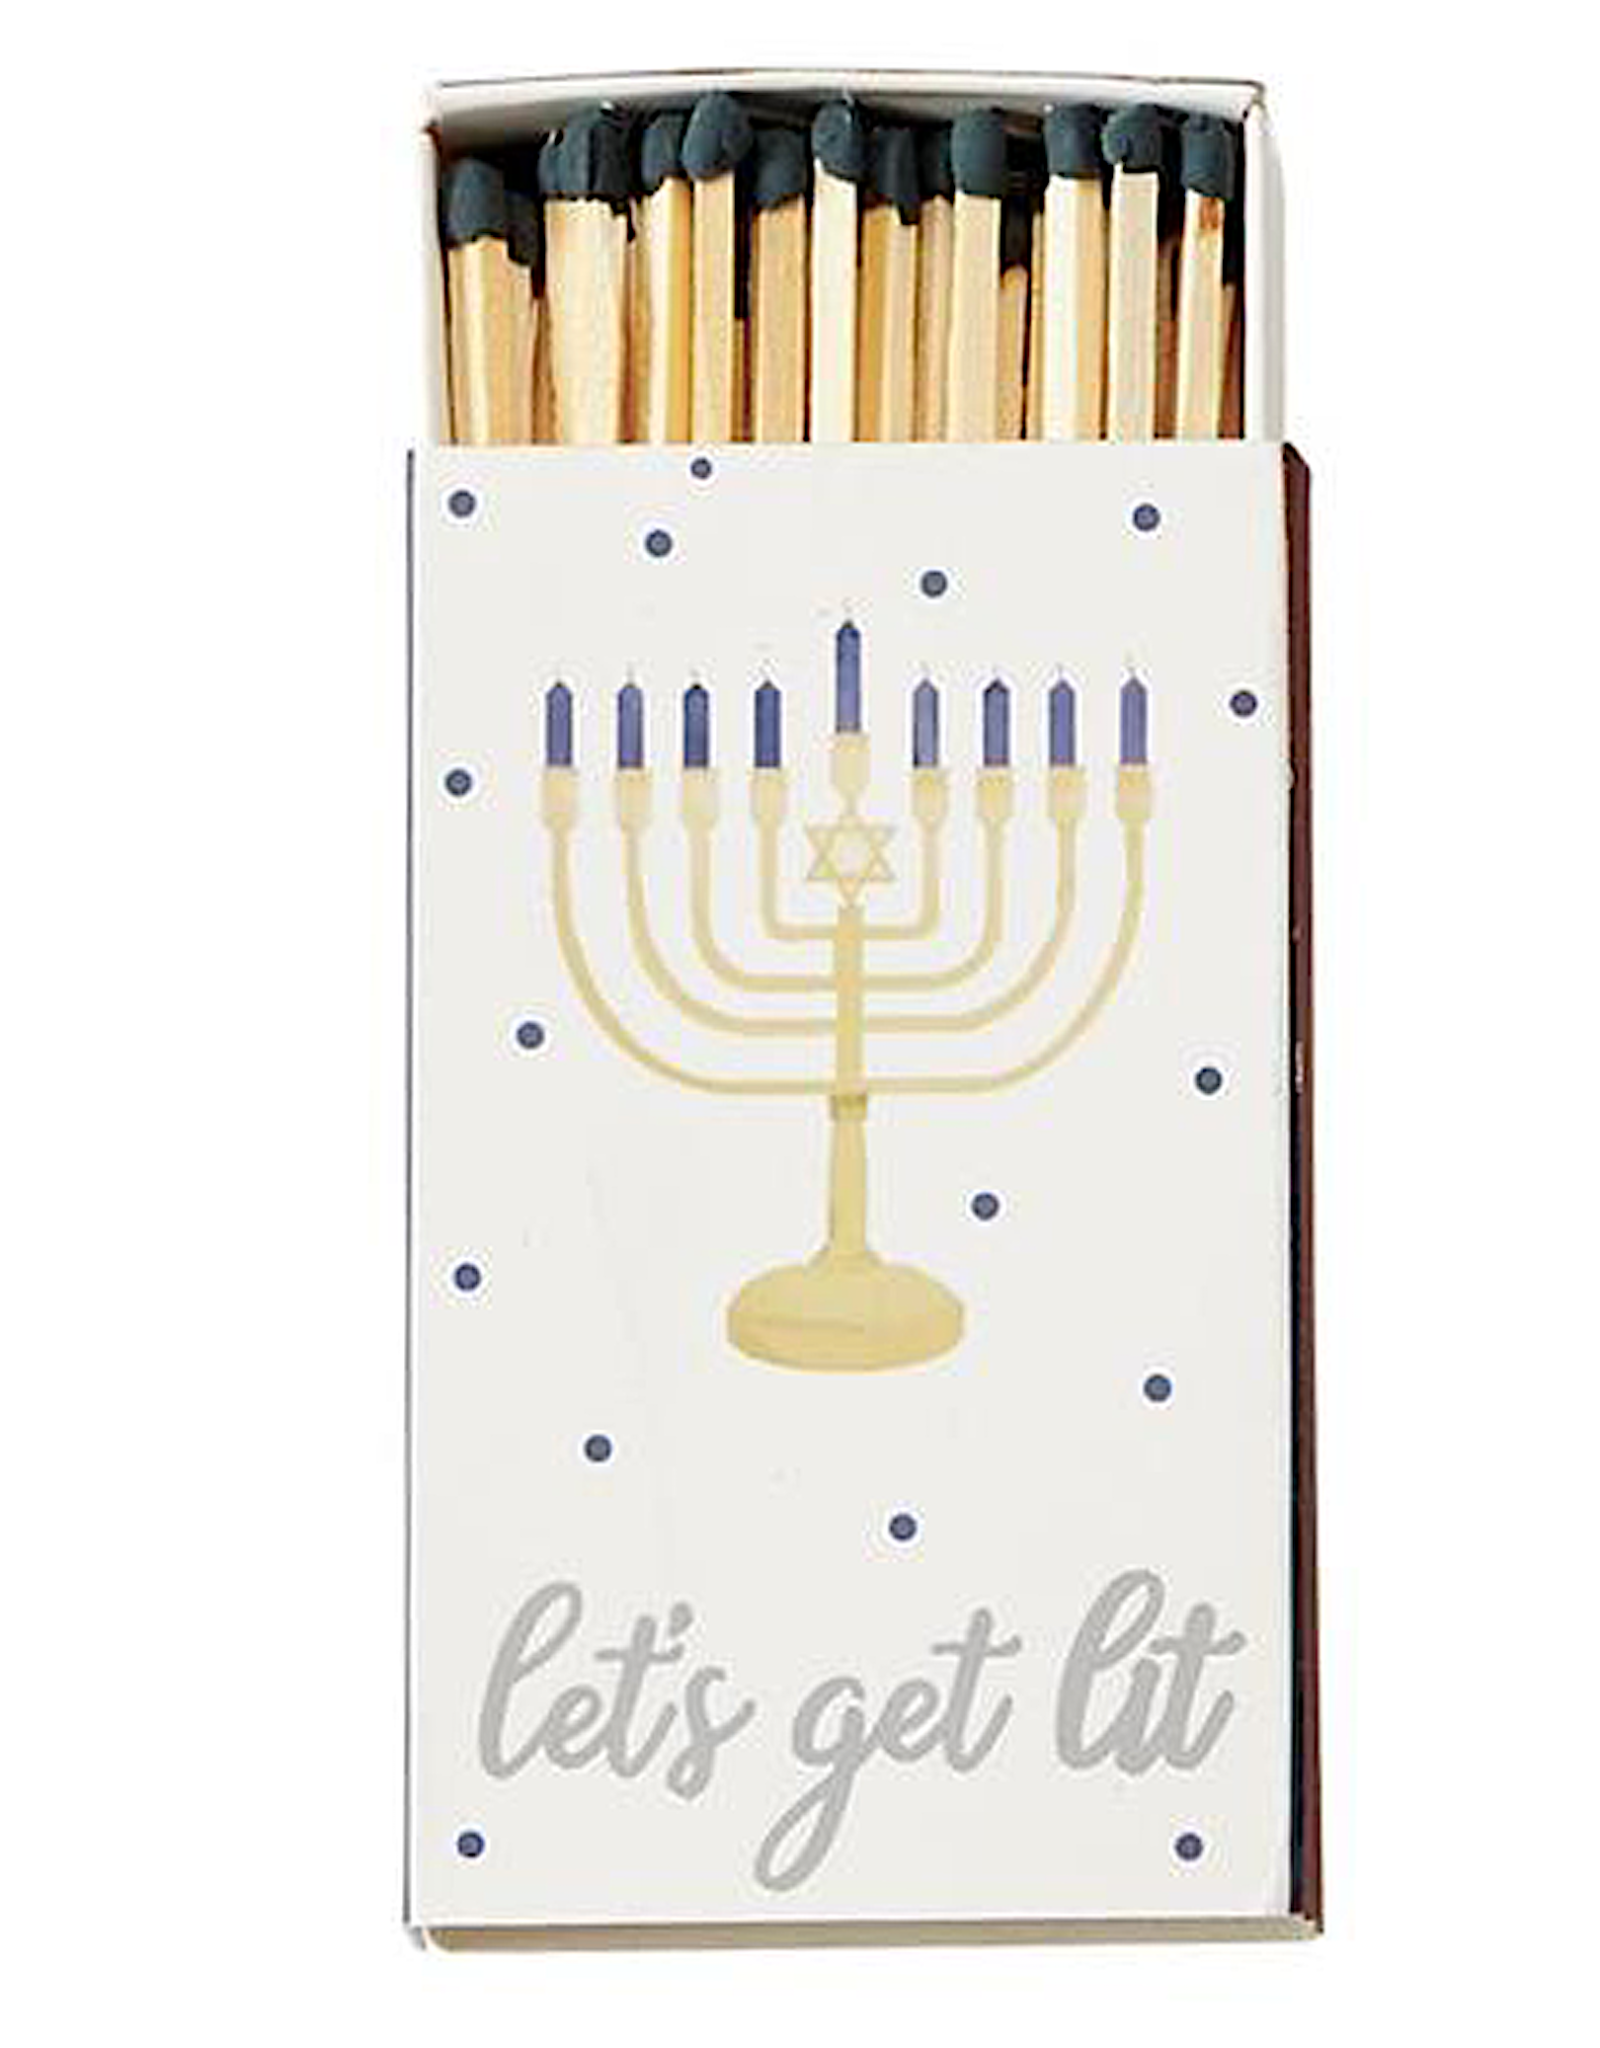 Mud Pie Hanukkah Match-Box With 60 Match Sticks w Lets Get Lit